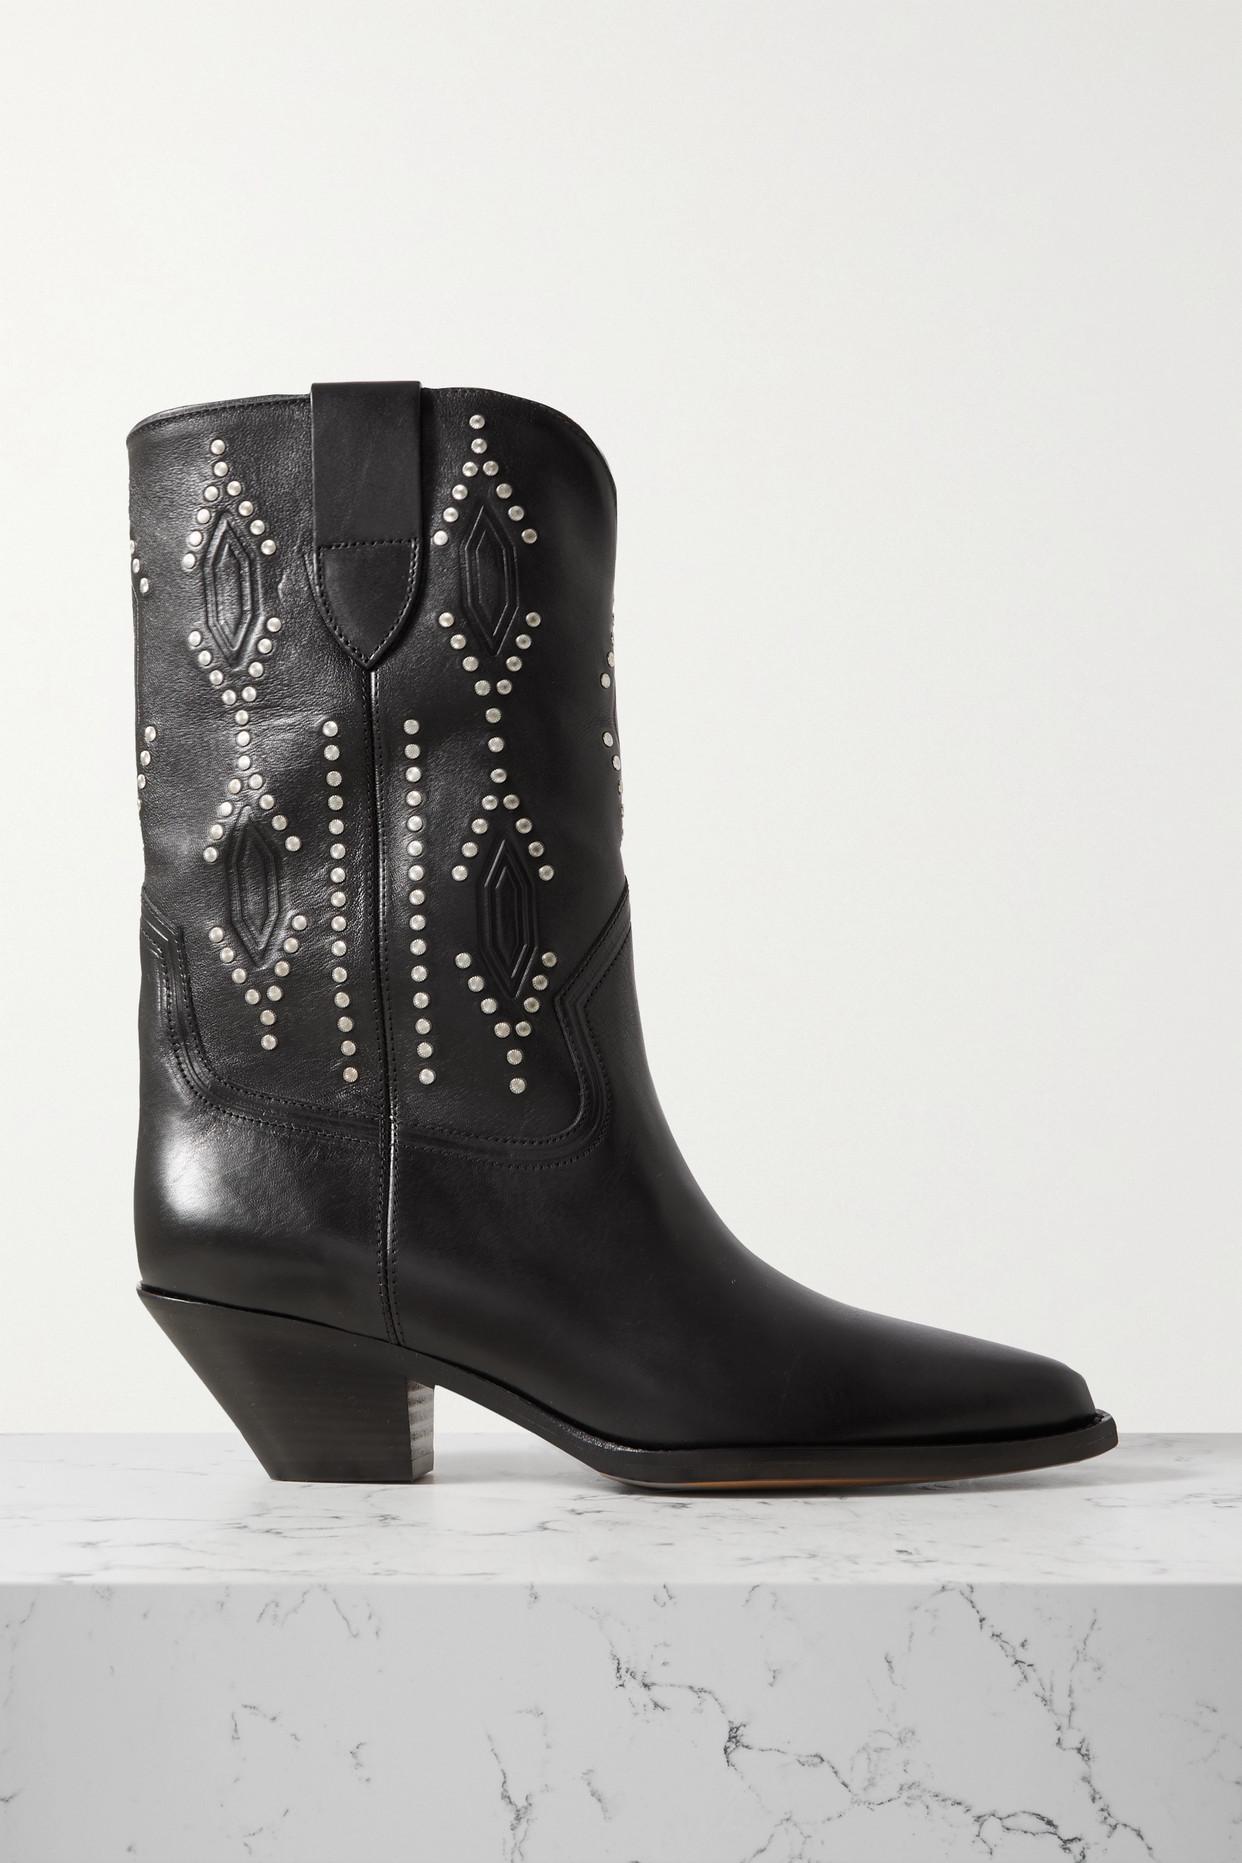 kontrast ligegyldighed Monarch Isabel Marant Dahope Studded Leather Boots in Black | Lyst